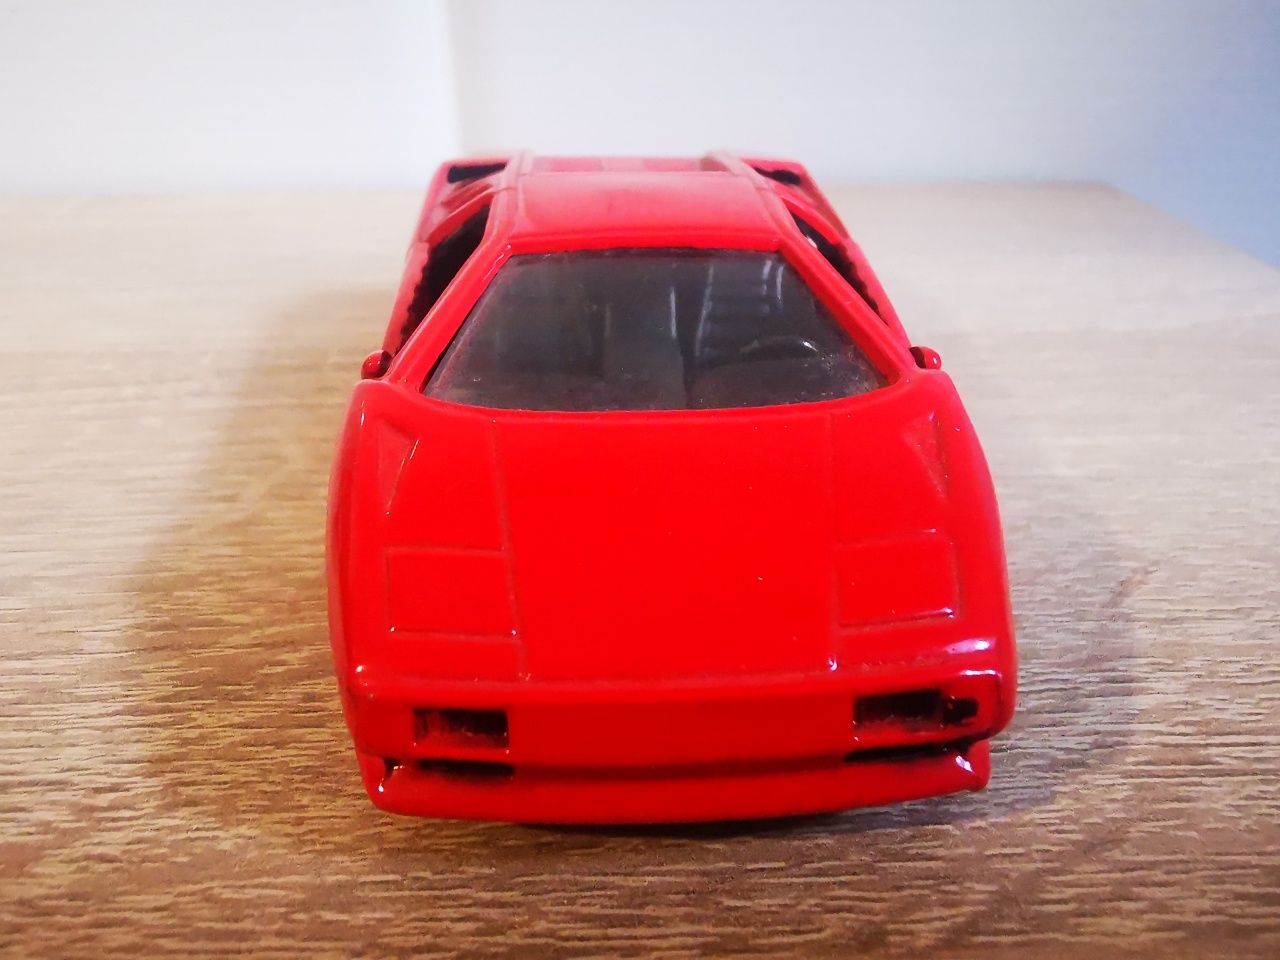 Macheta Lamborghini Diablo / Masinuta Lamborghini de colectie